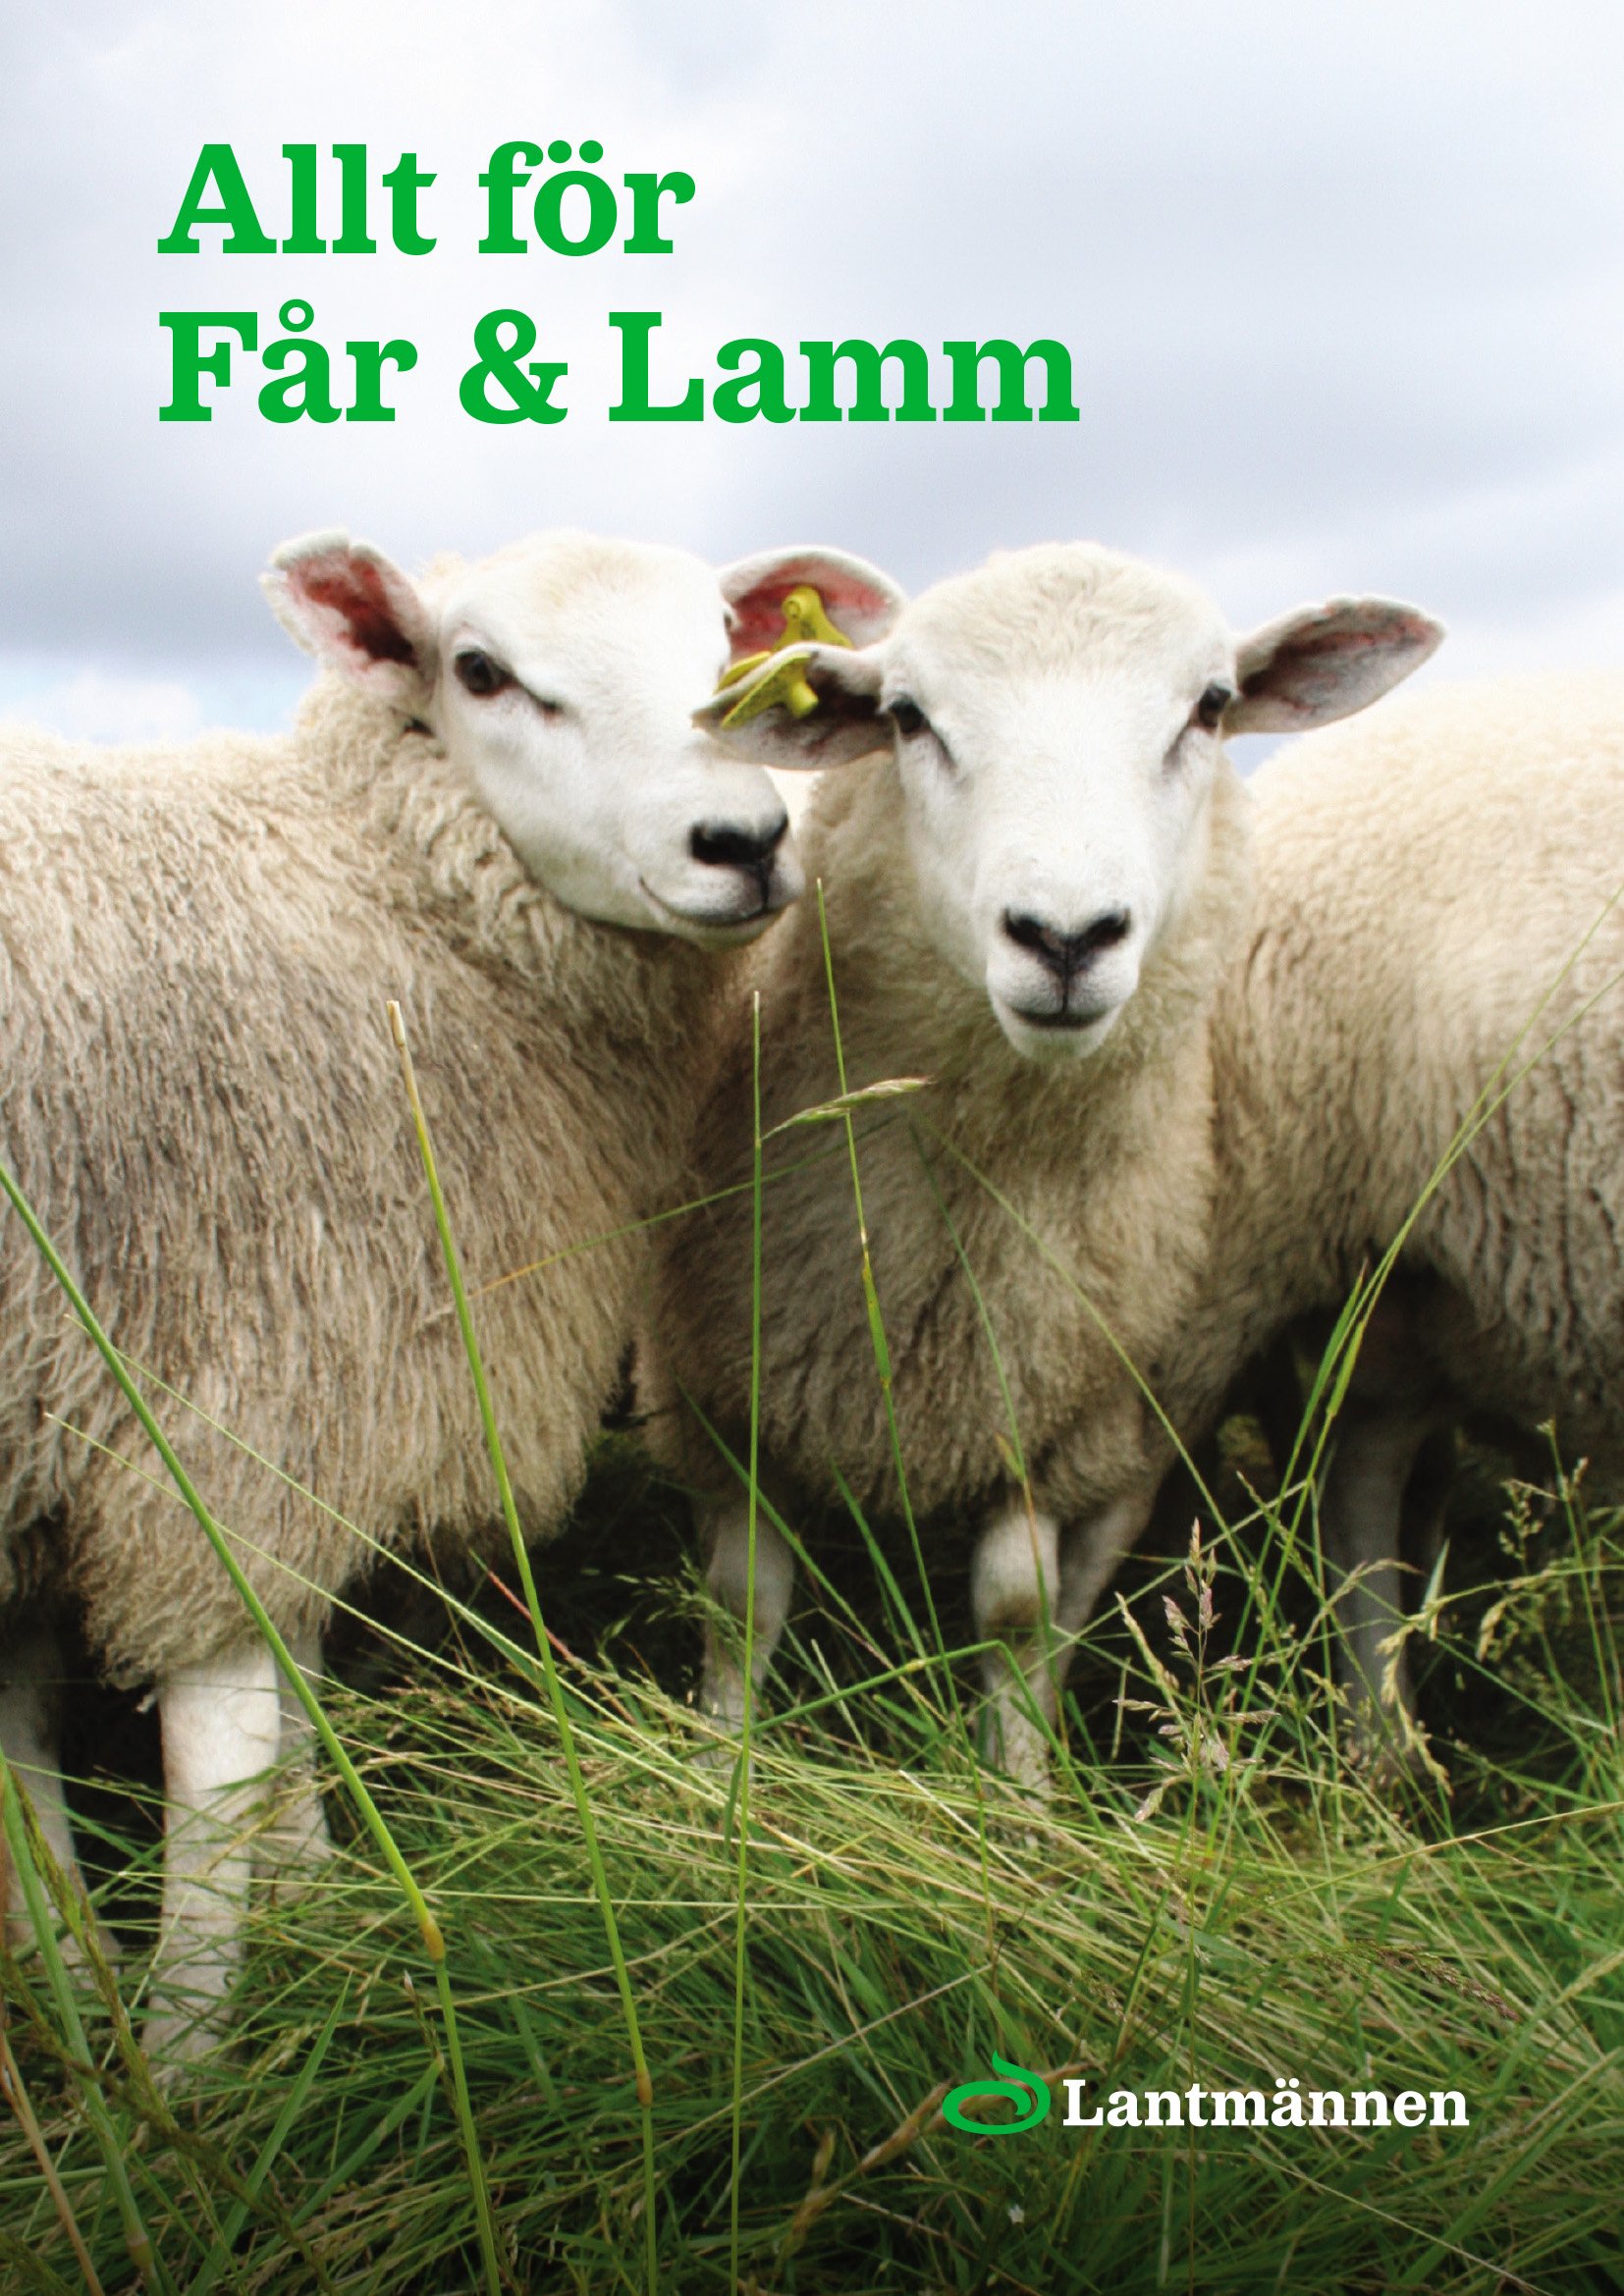 Lantmannen_Allt_for_Far_och_Lamm.pdf